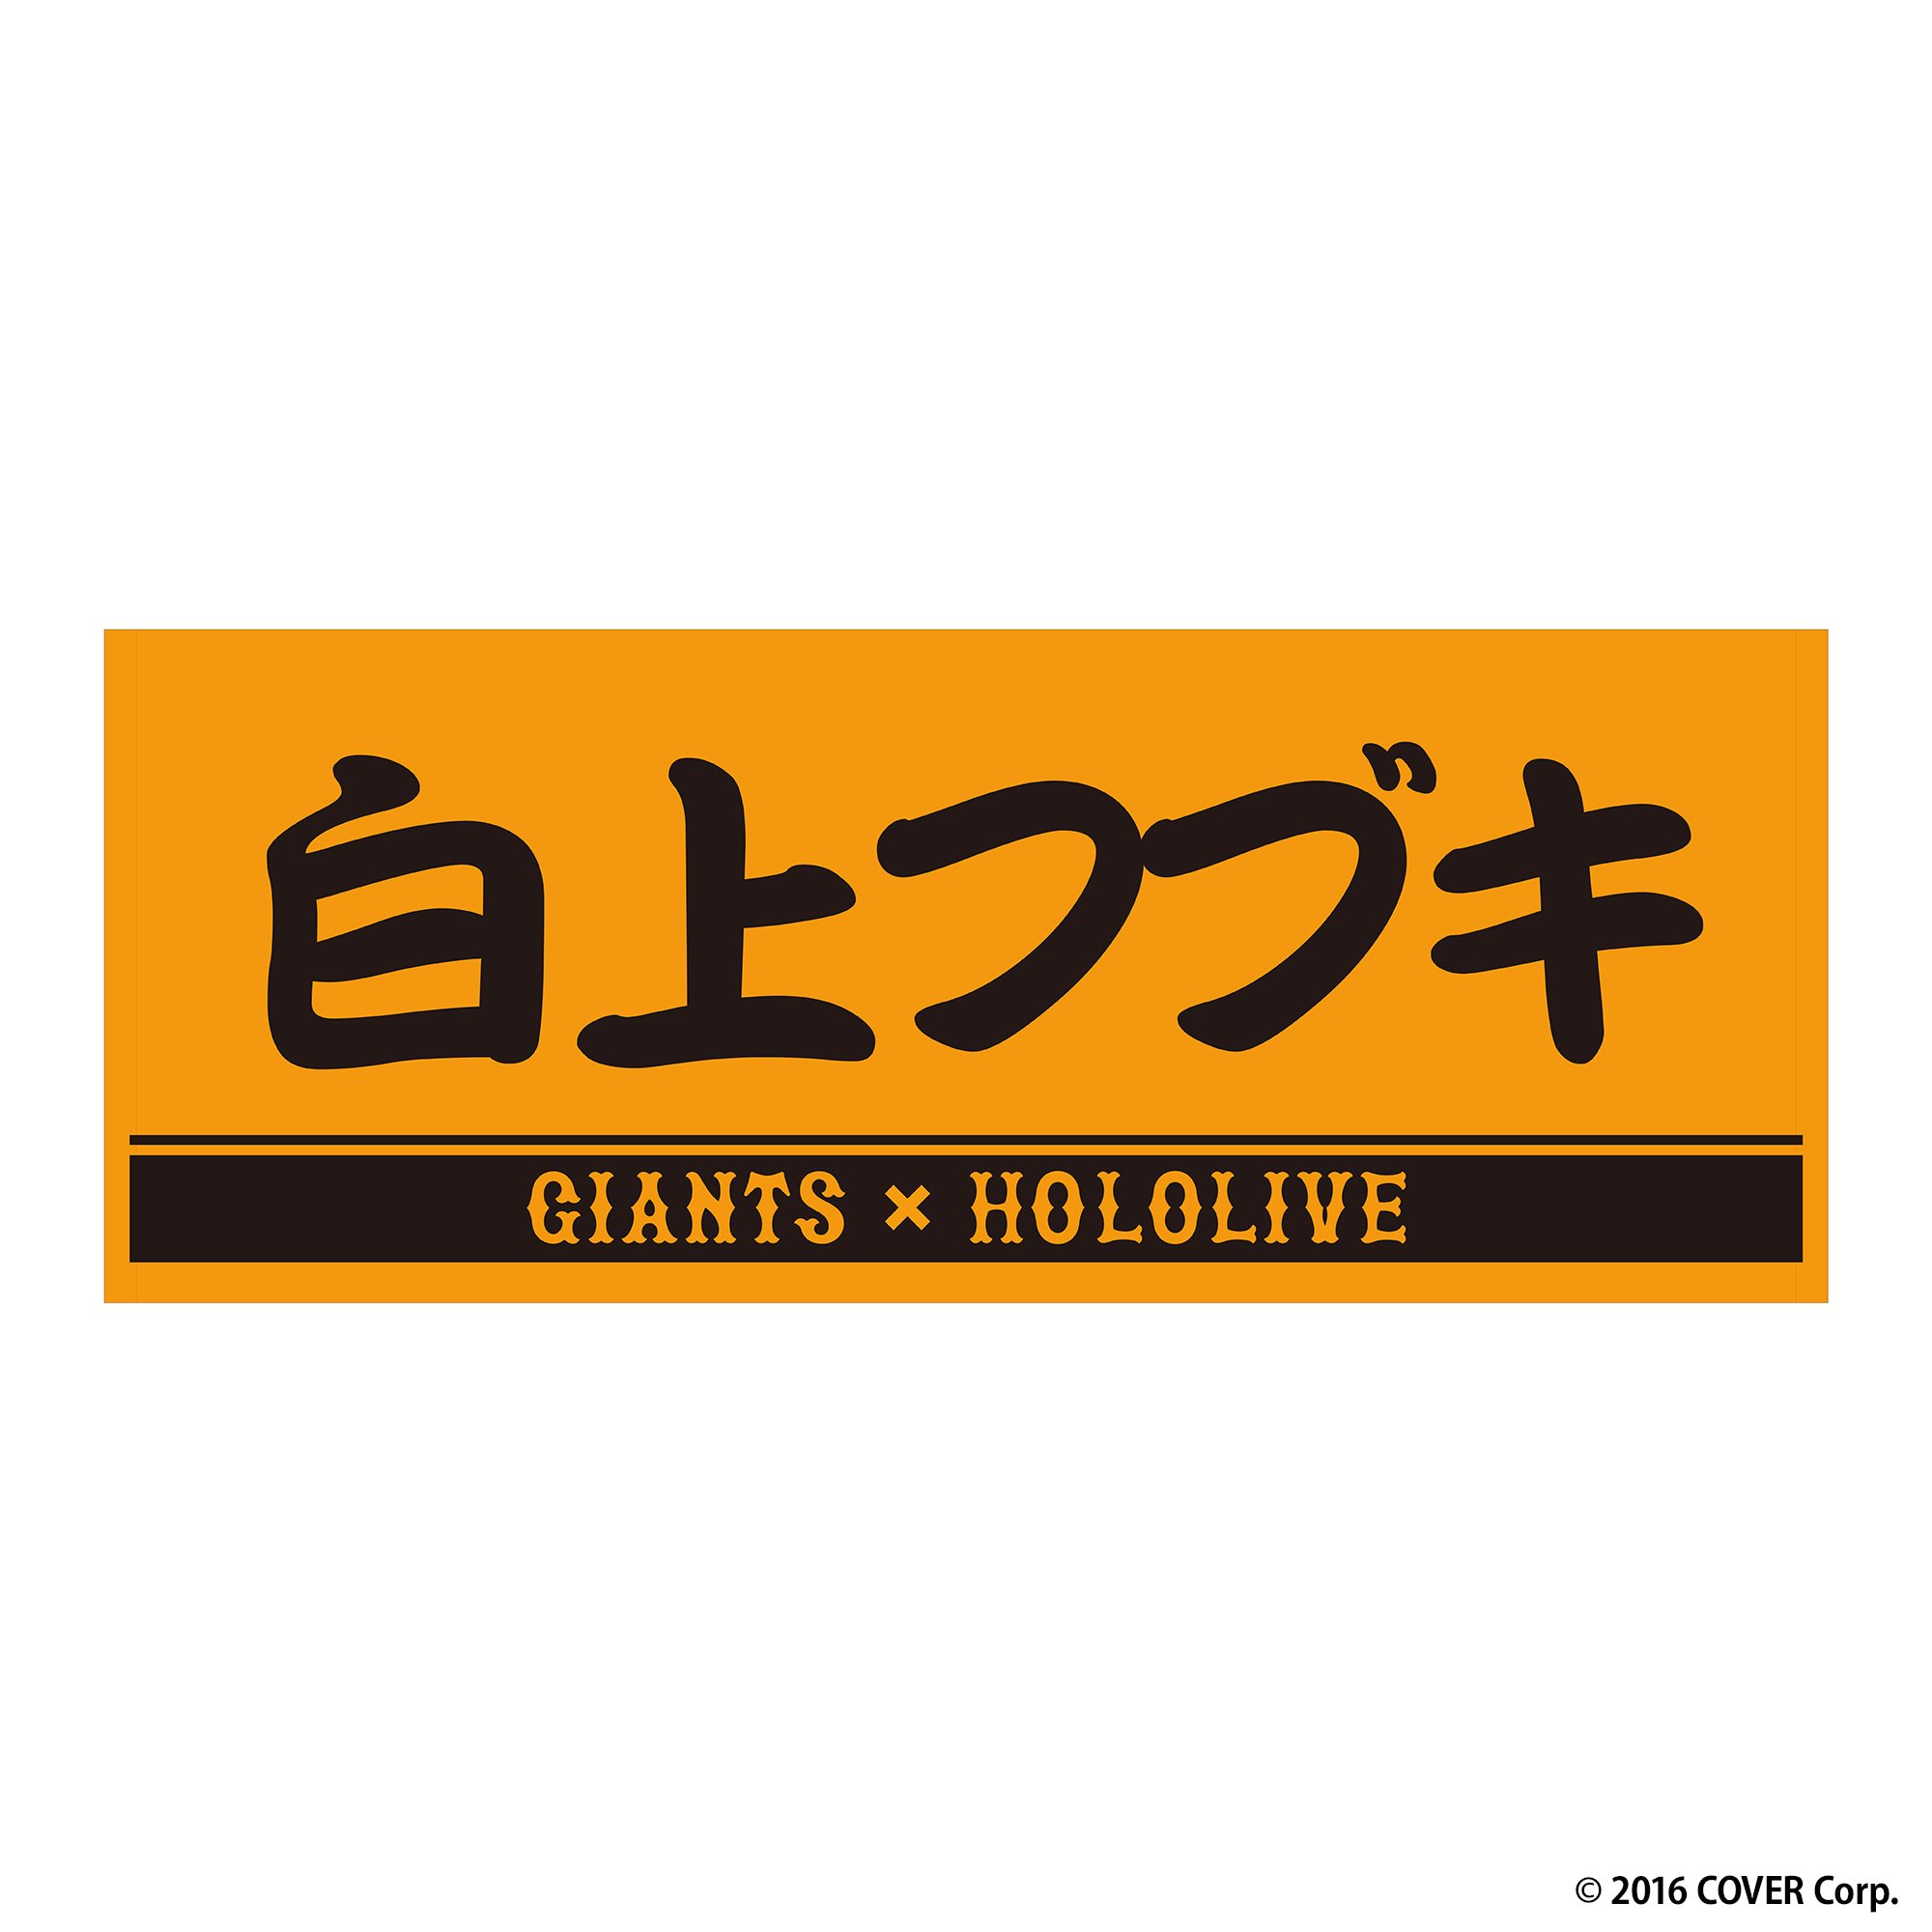 holololive-yomiuri-giants-merch-2.jpg